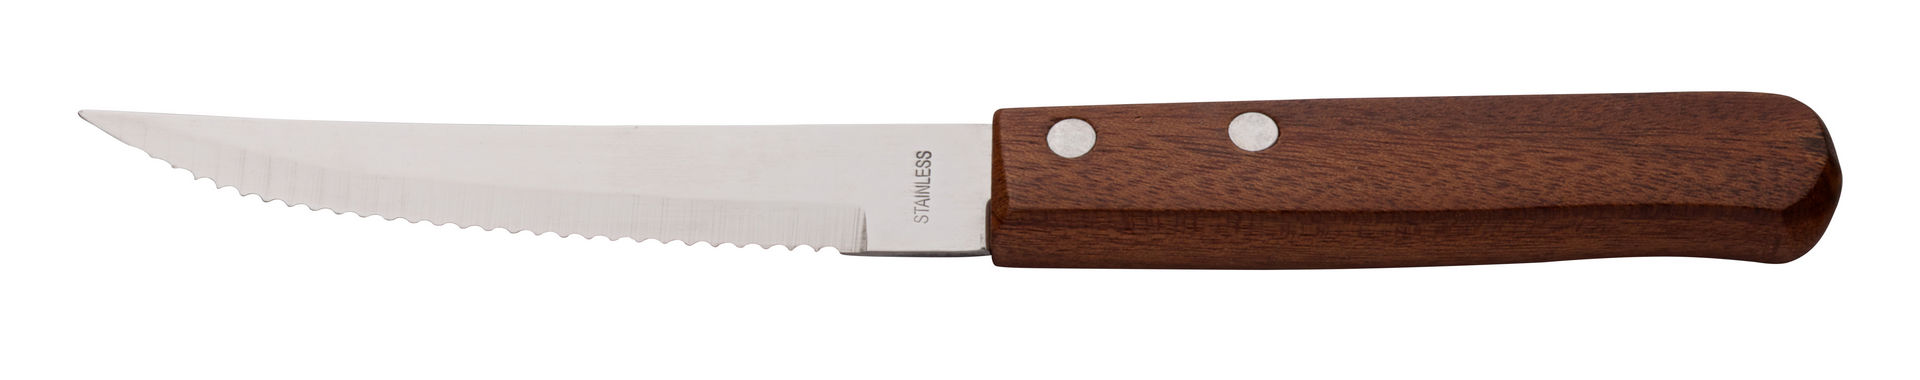 Wooden Handle Steak Knife - F10613-000000-B01012 (Pack of 12)